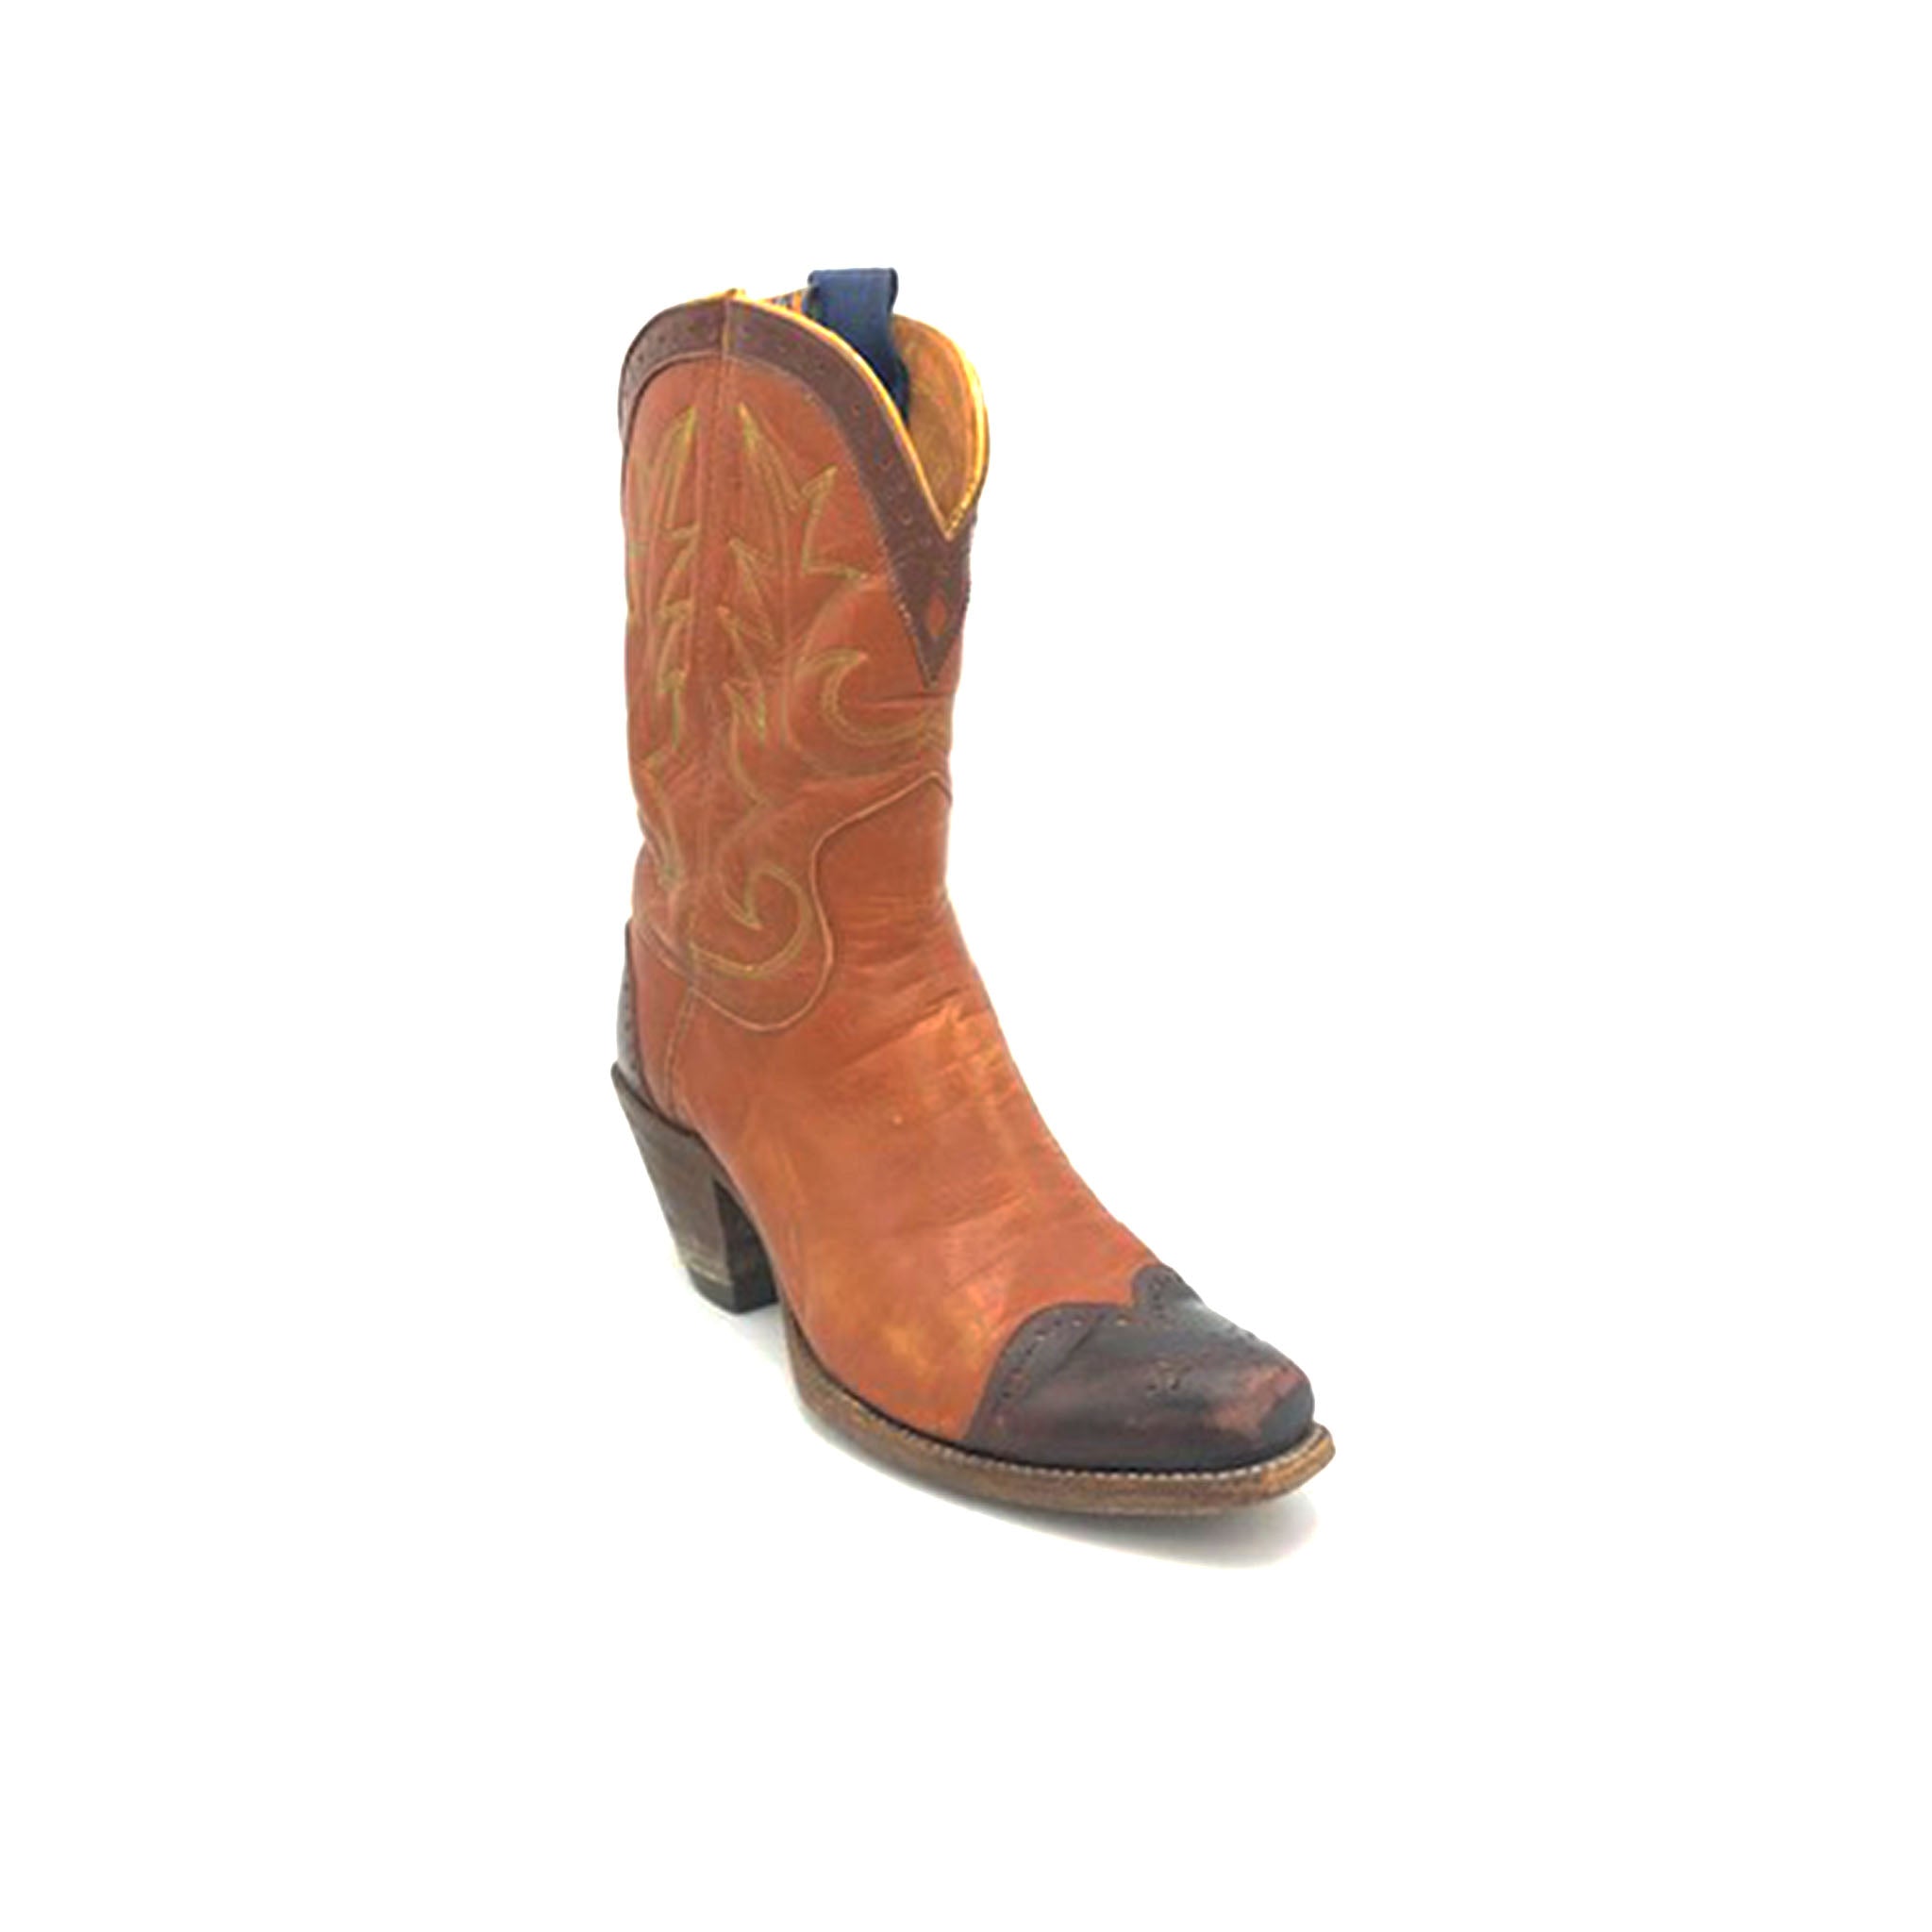 Hyer Cowboy Boots – Boot Star 